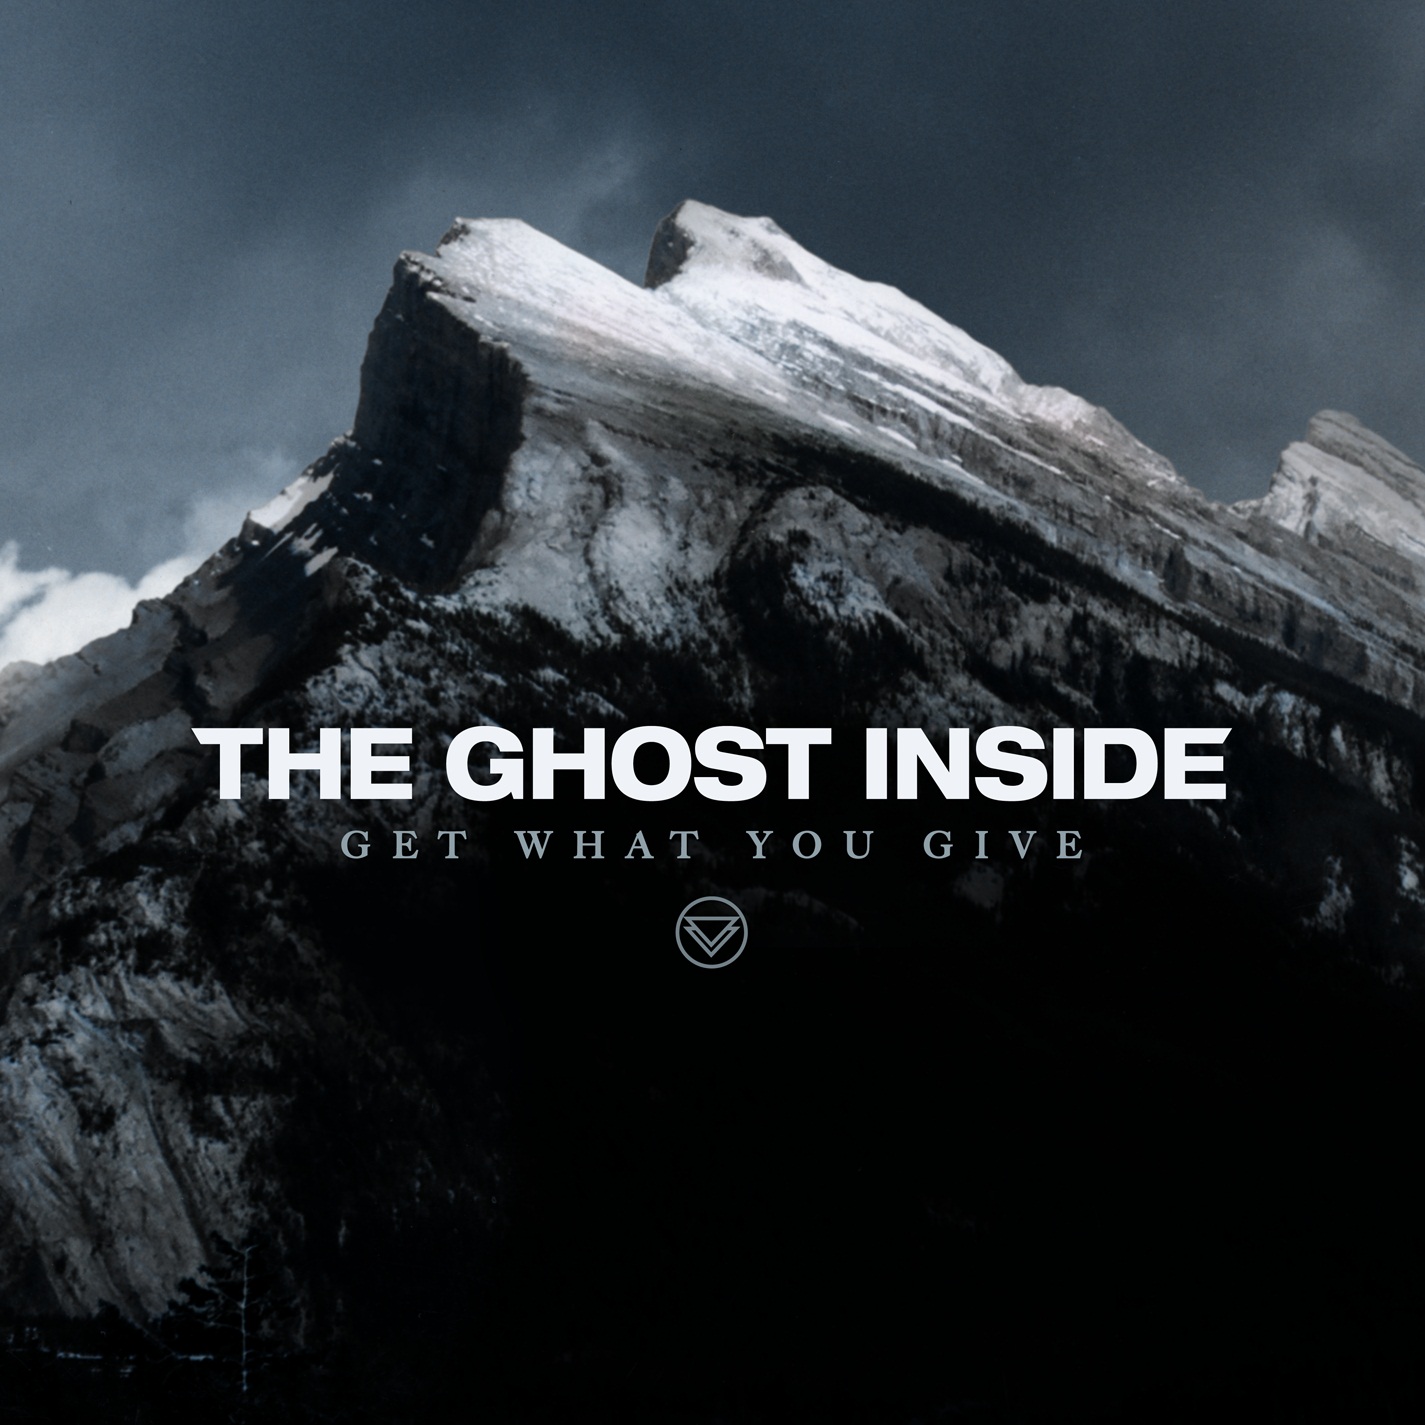 The Ghost Inside explain lyrics in web series